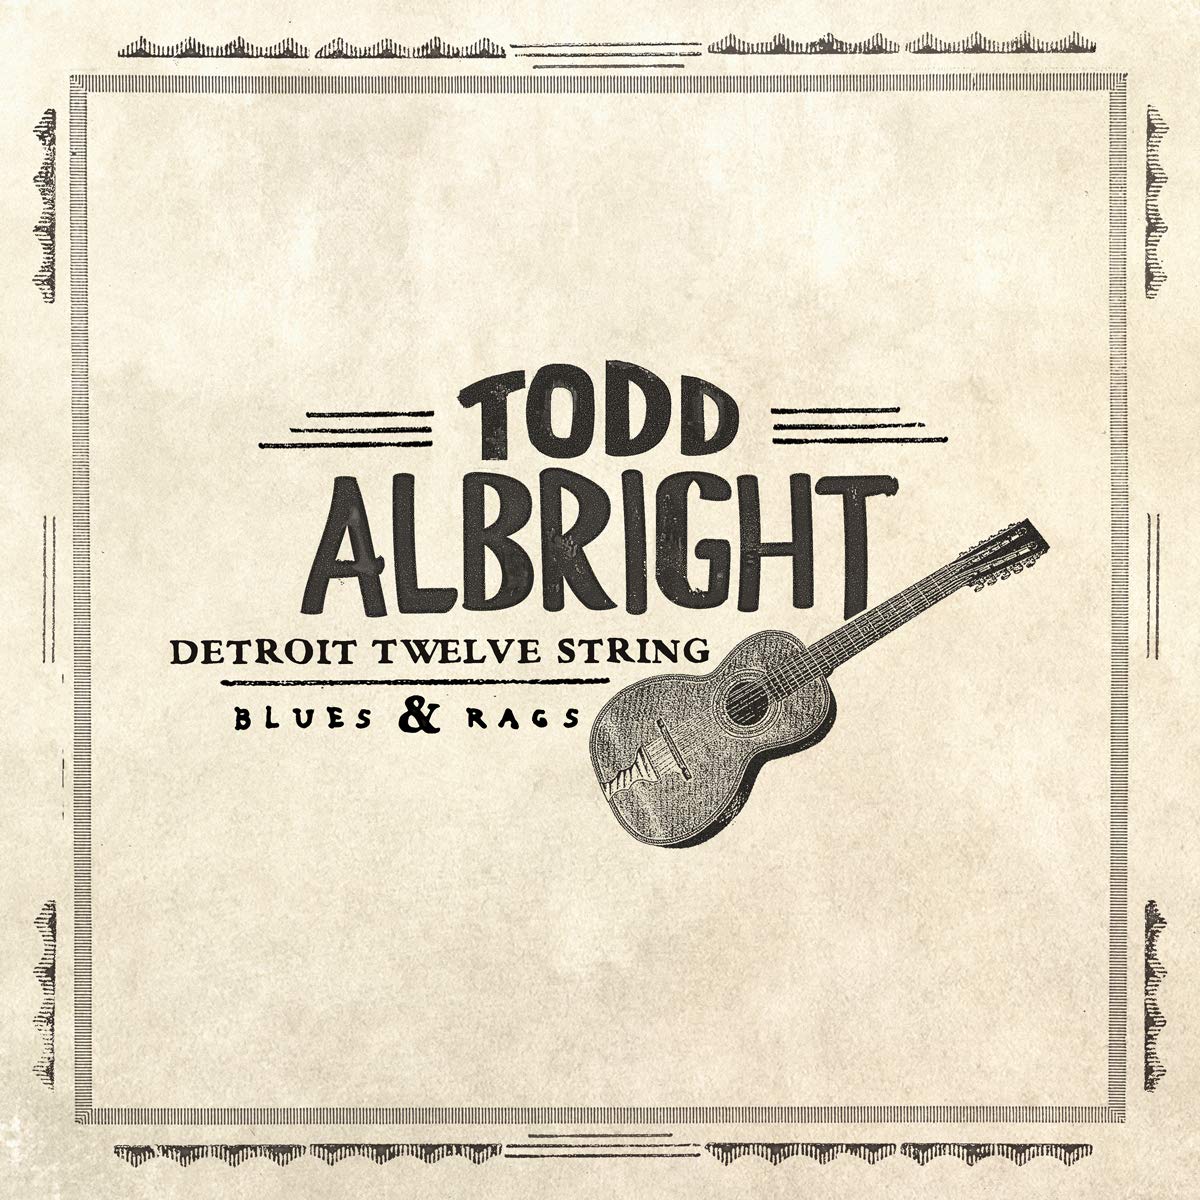 Todd Albright - Detroit Twelve String Blues & Rags (Vinyl LP)